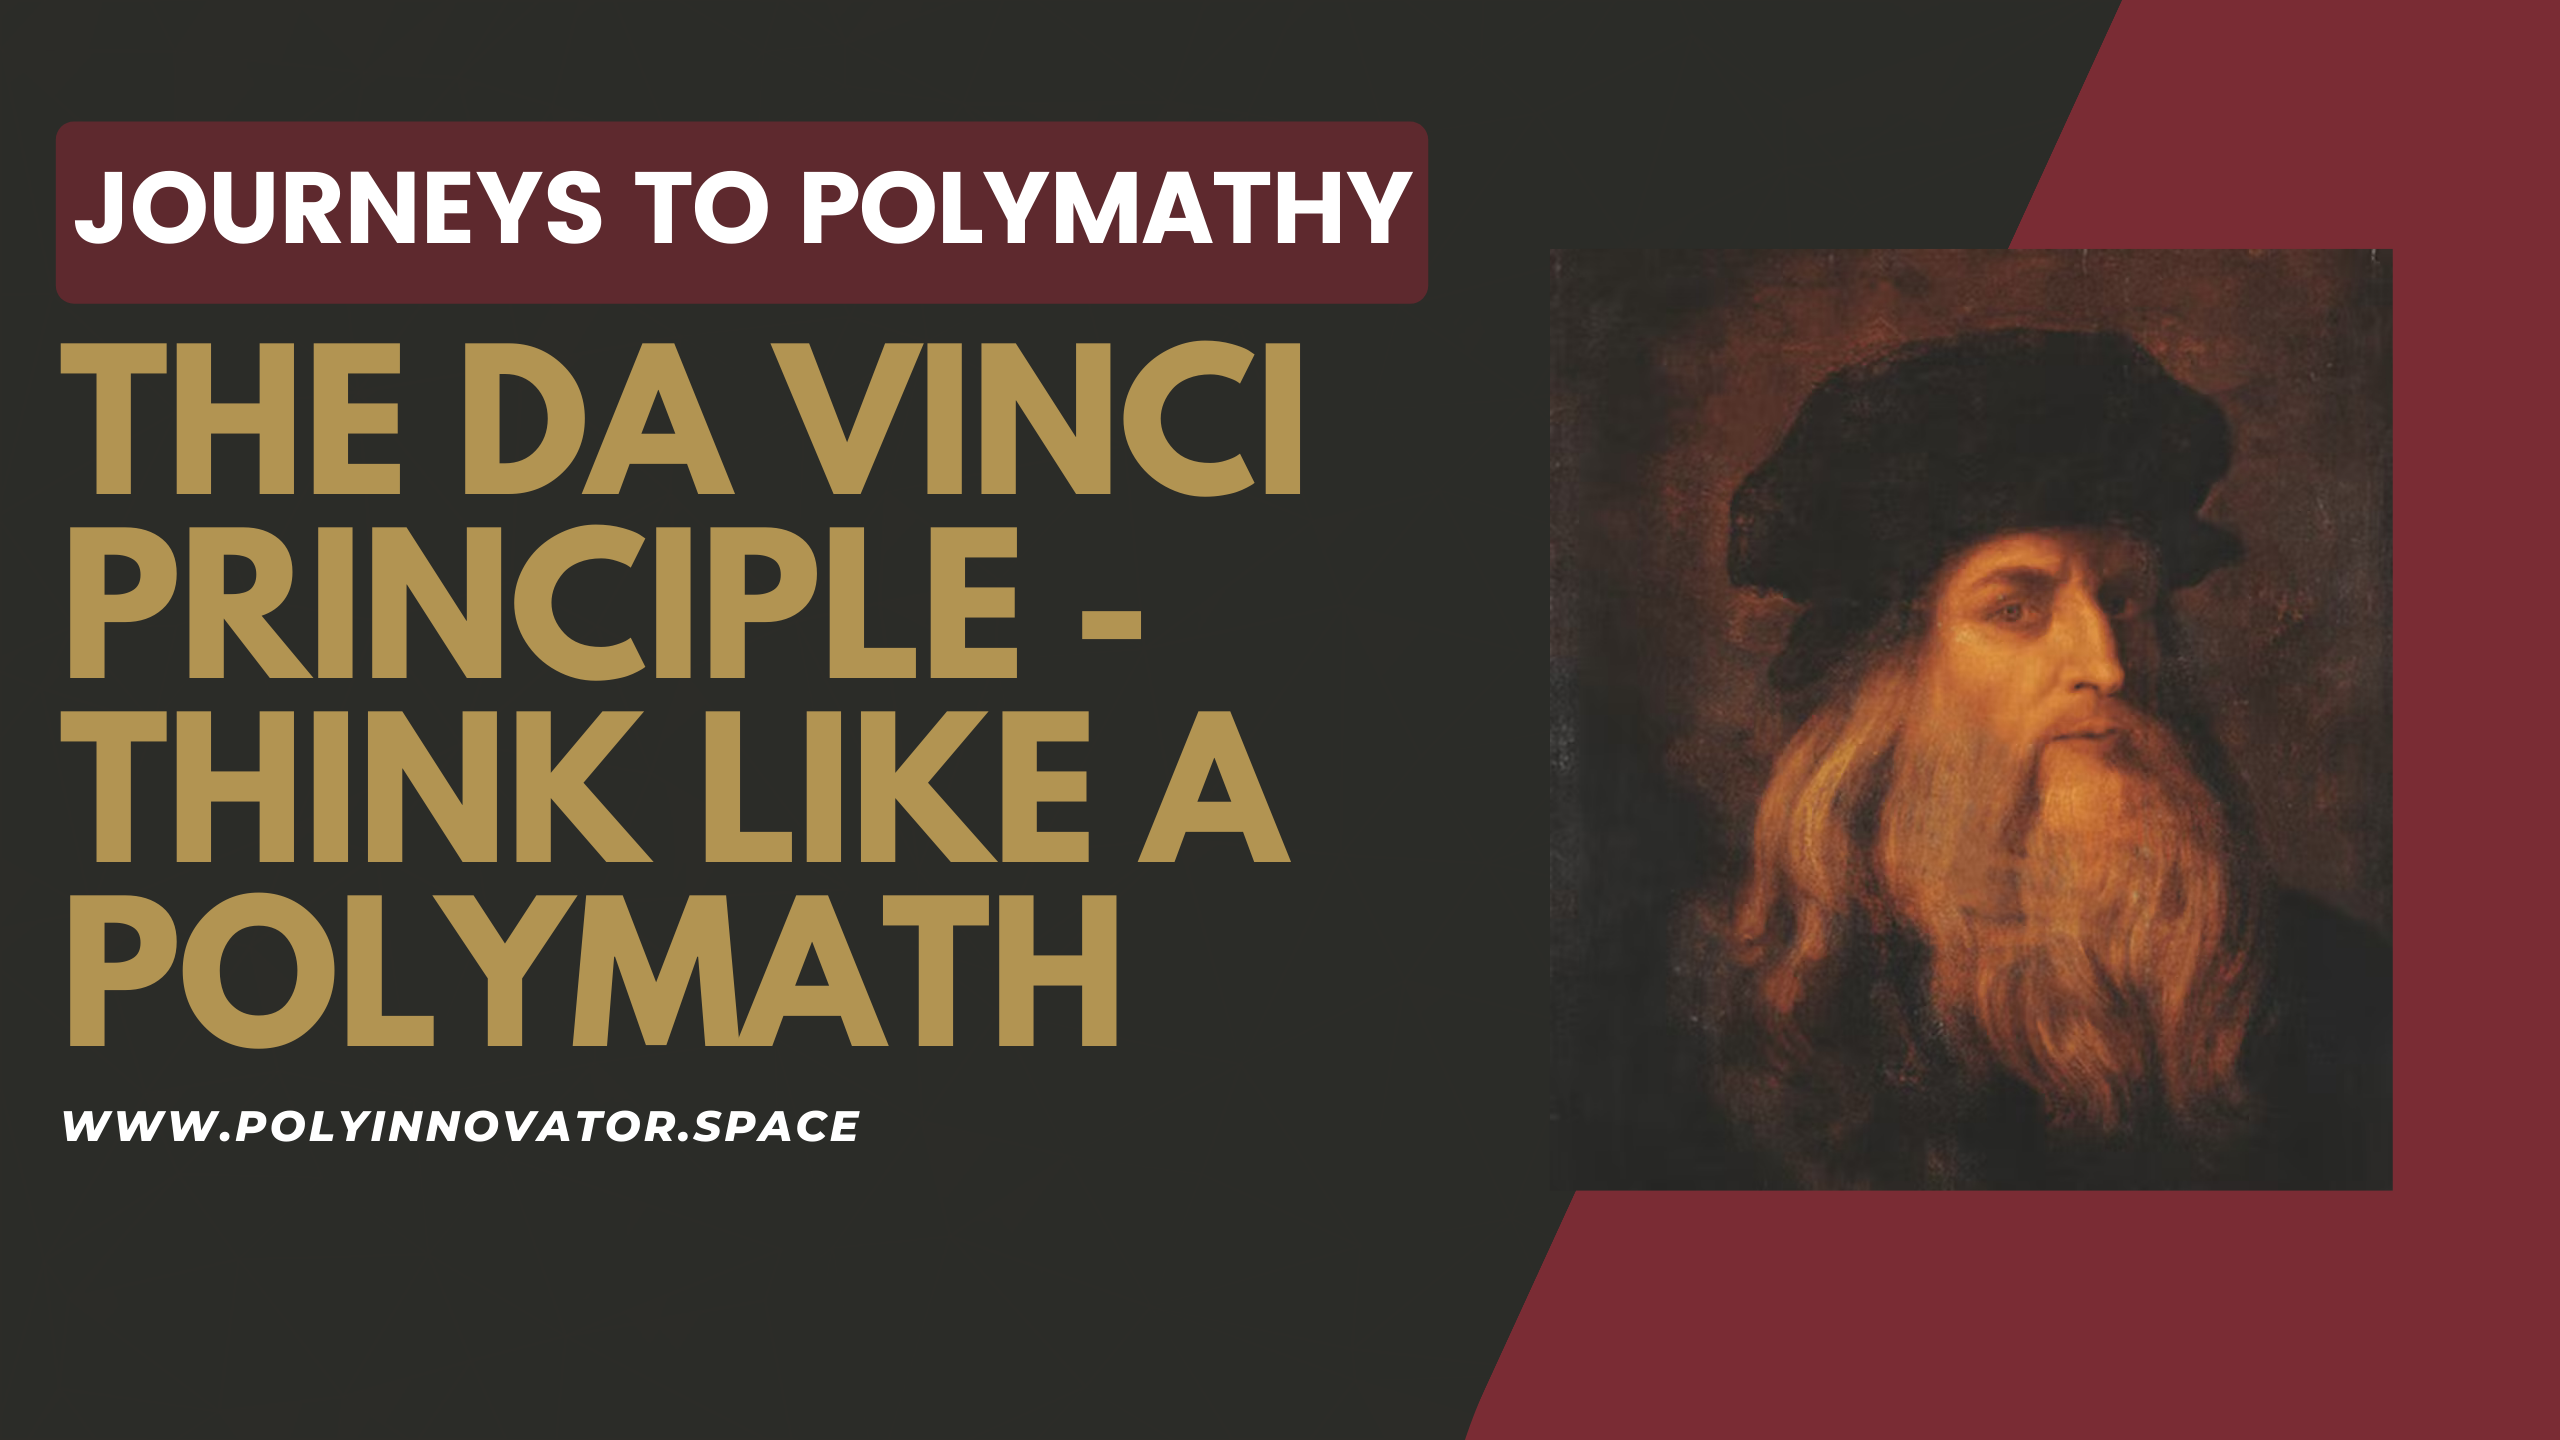 The Da Vinci Principle - Think like a Polymath